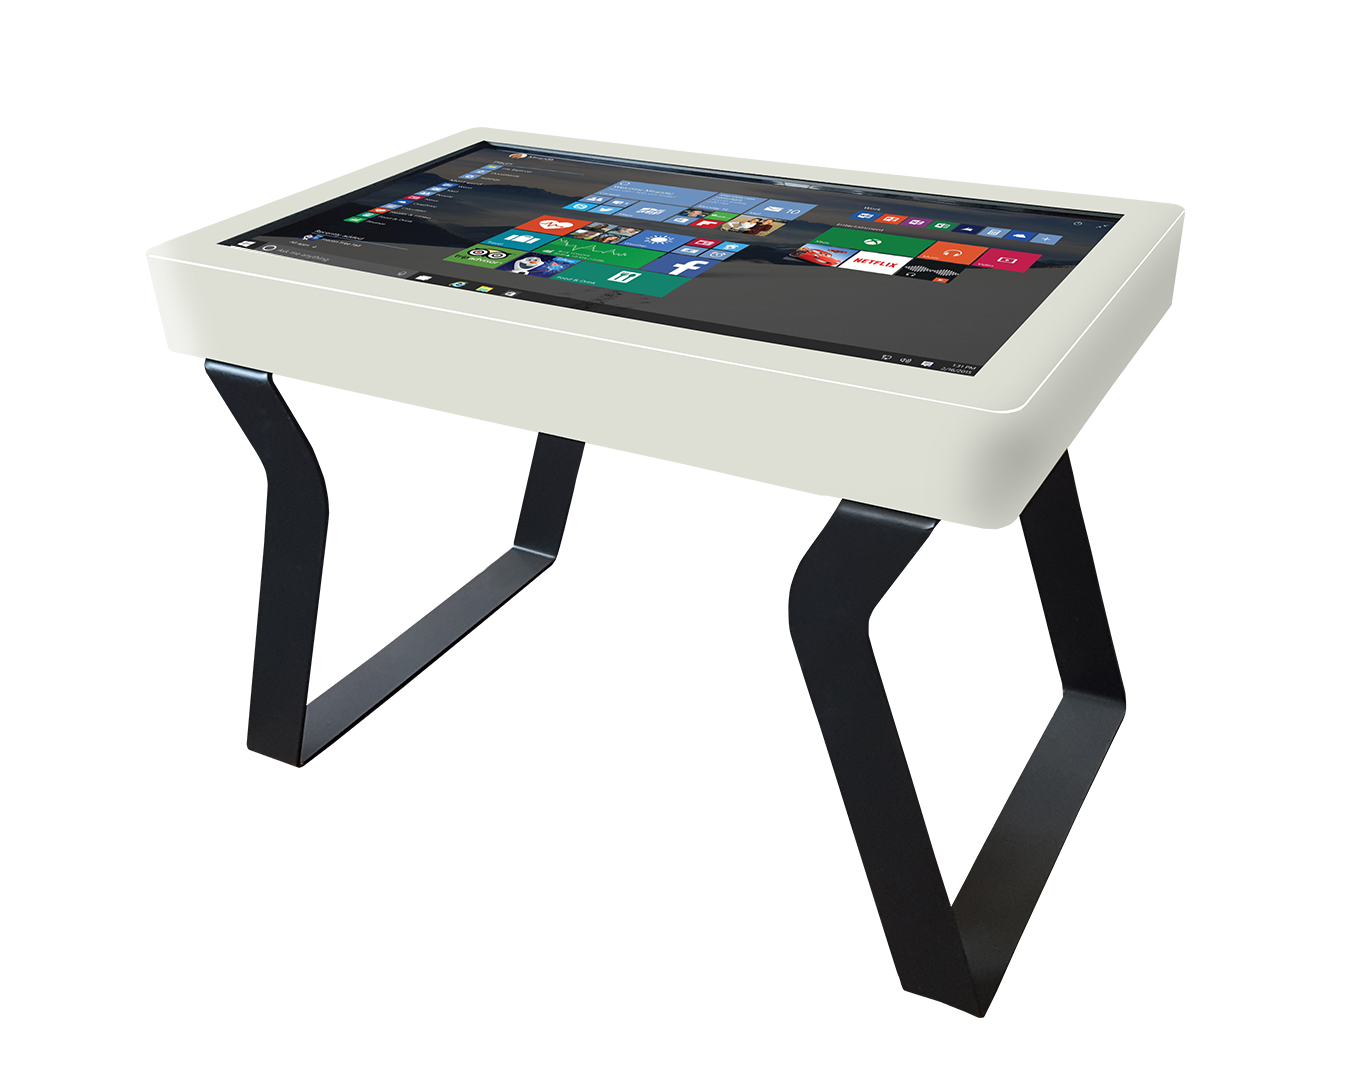 Интерактивный стол SKY Standard диагональ экрана 32 дюйма